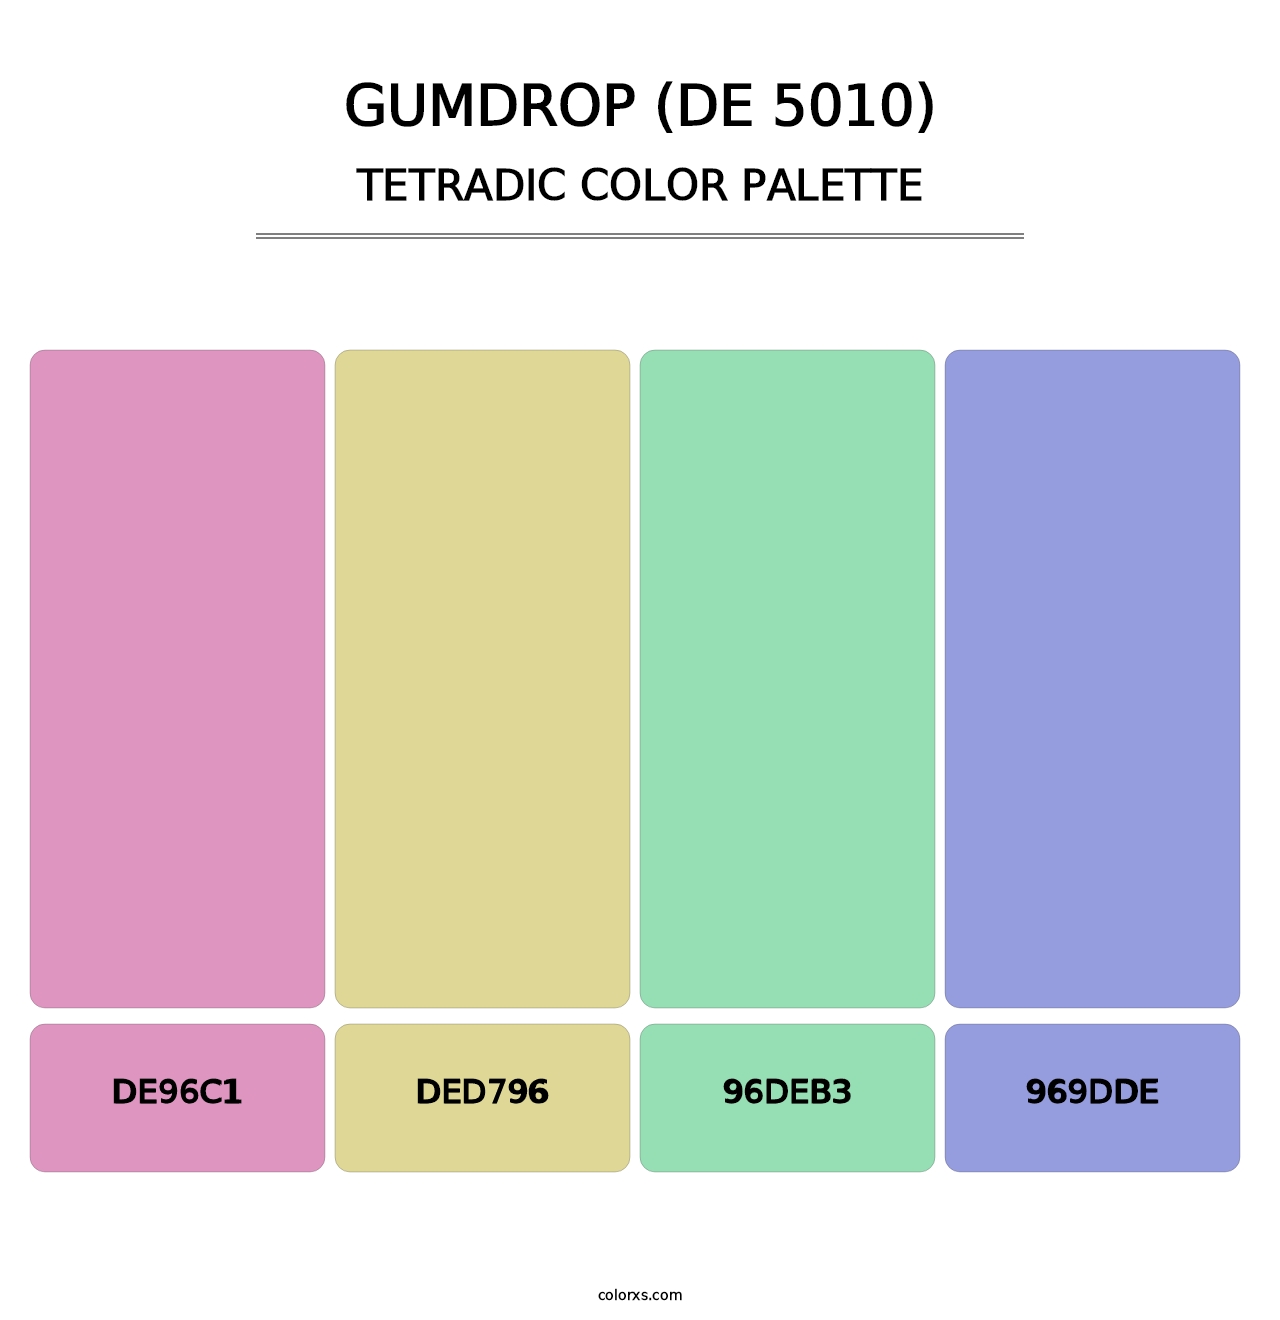 Gumdrop (DE 5010) - Tetradic Color Palette